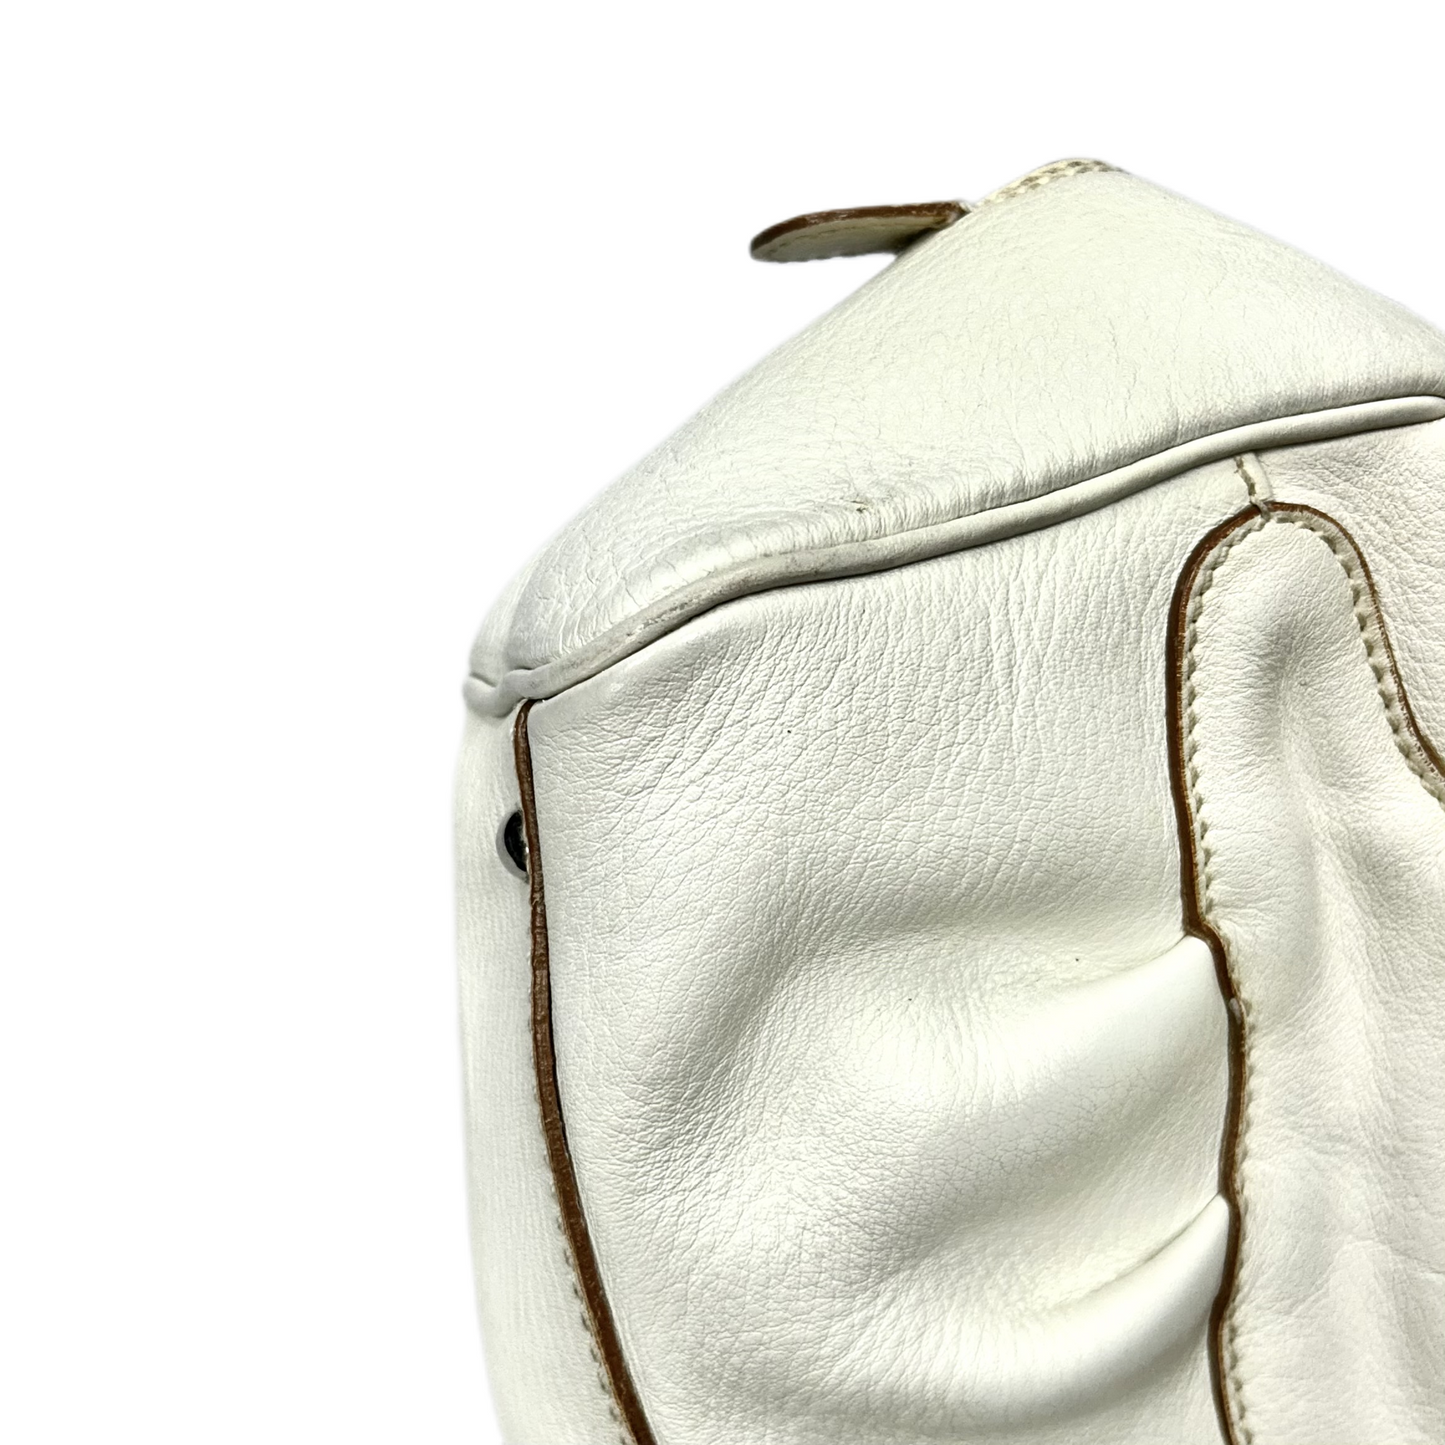 Handbag Luxury Designer By Ferragamo, Size: Small